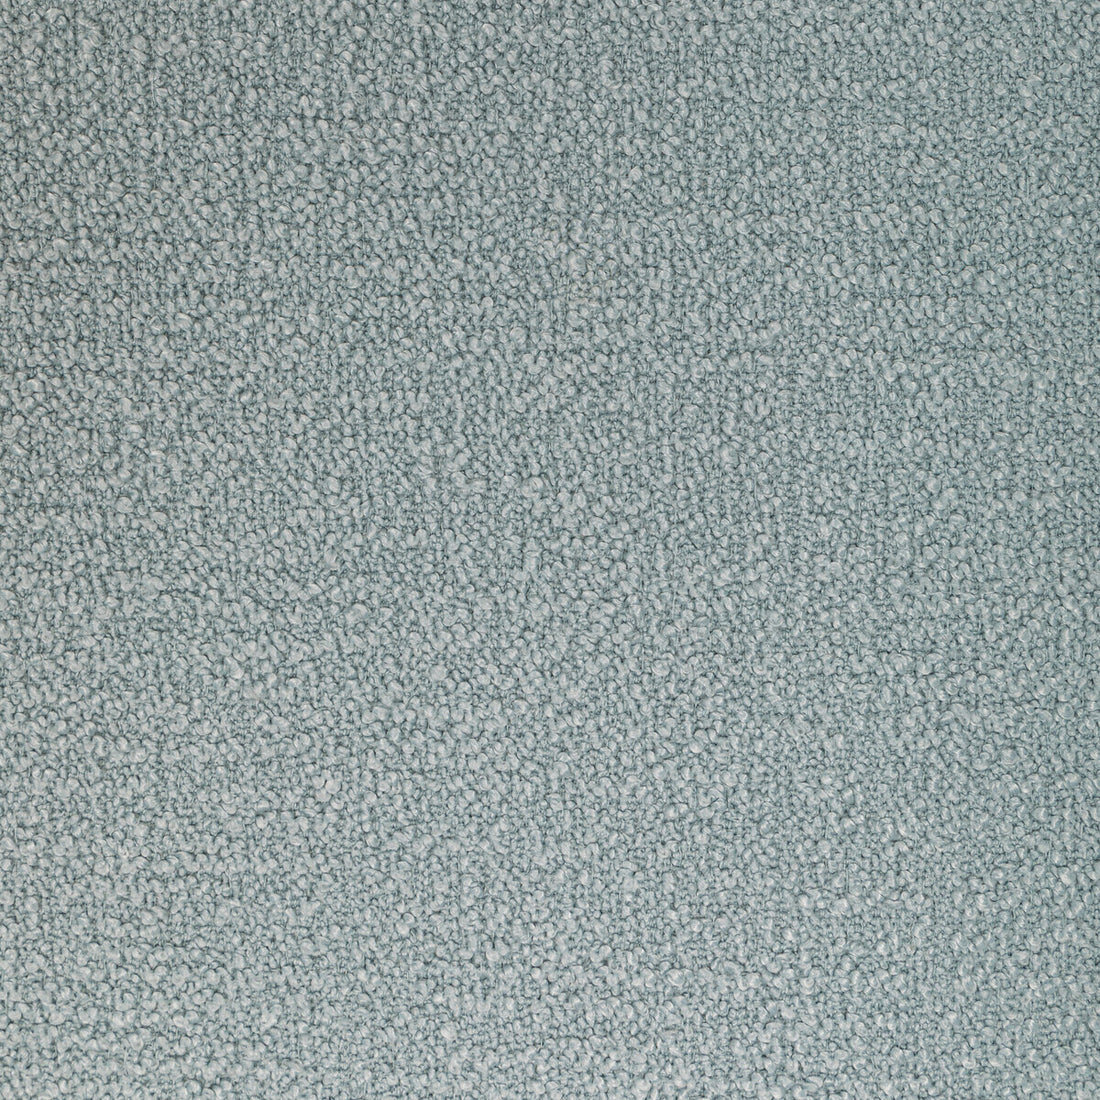 Kravet Smart fabric in 36857-15 color - pattern 36857.15.0 - by Kravet Smart in the Performance Kravetarmor collection